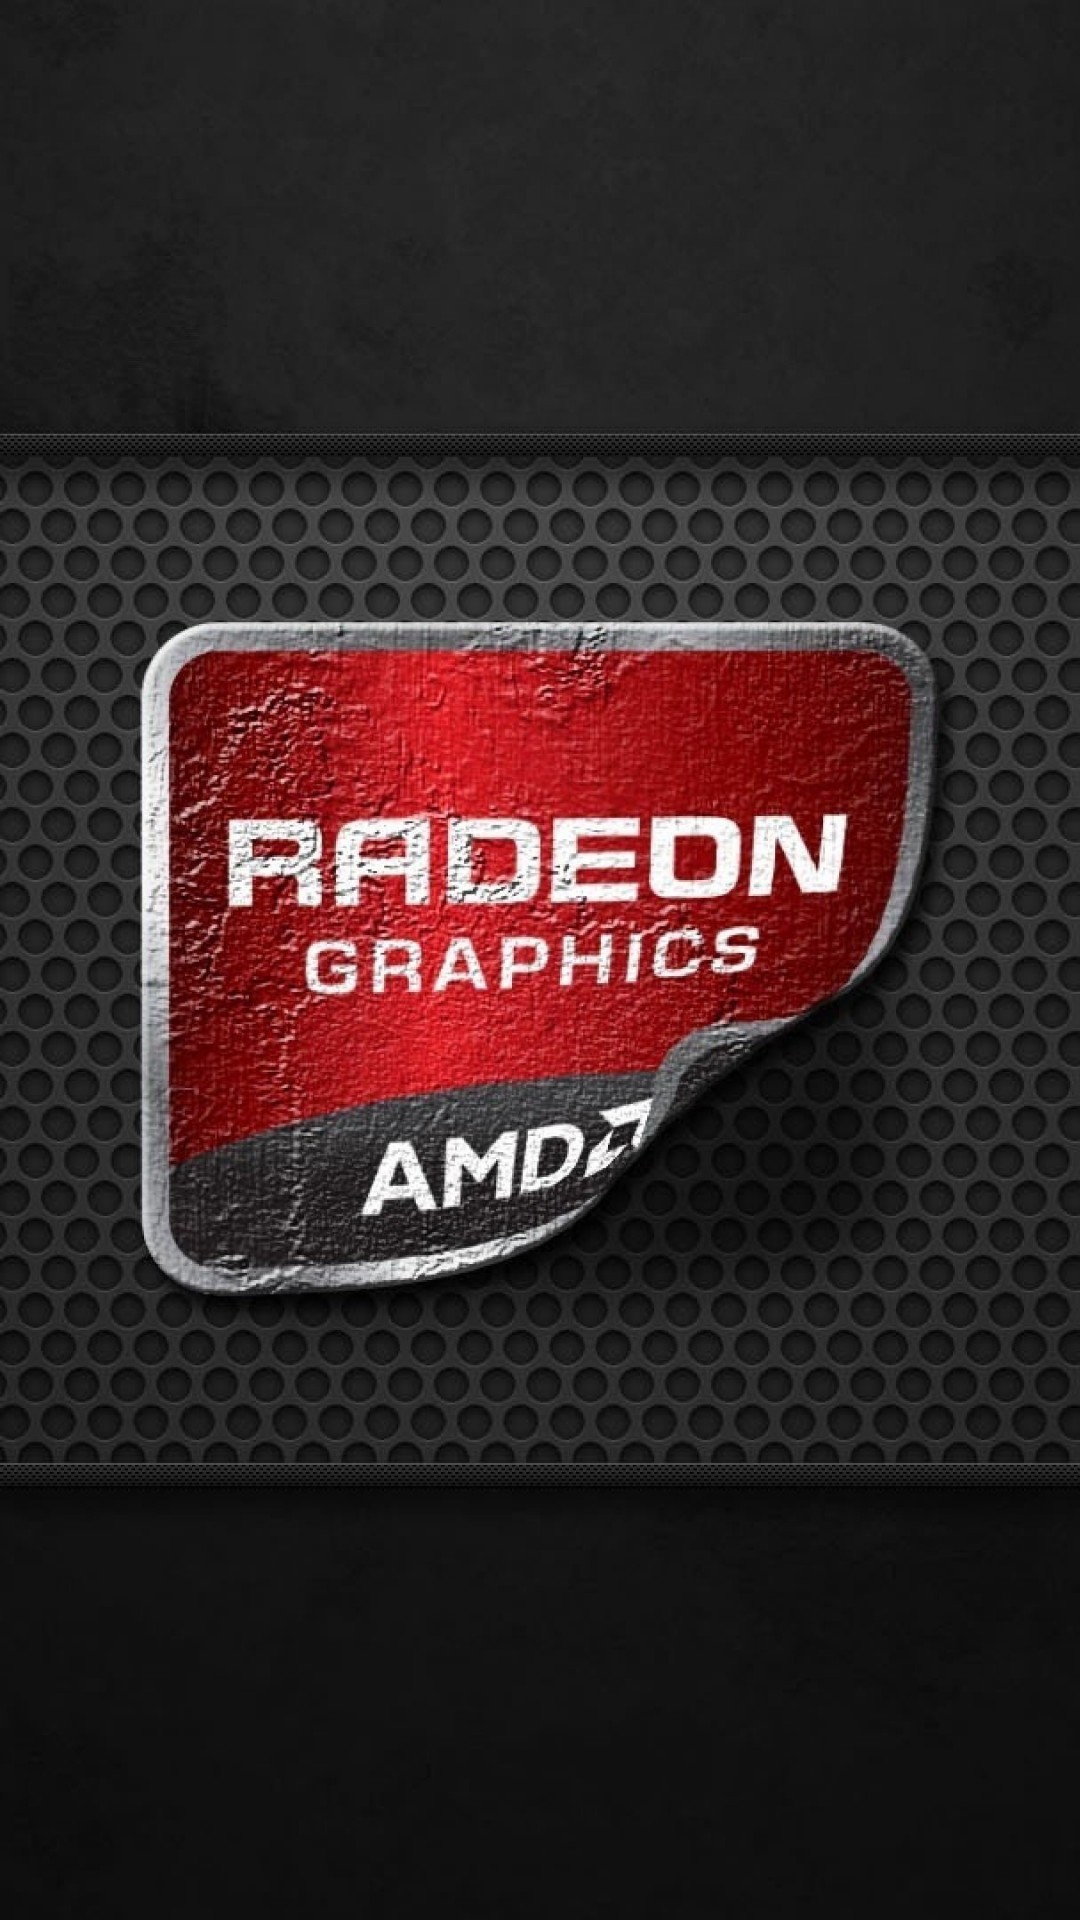 AMD Radeon Graphics Wallpaper for SAMSUNG Galaxy S4